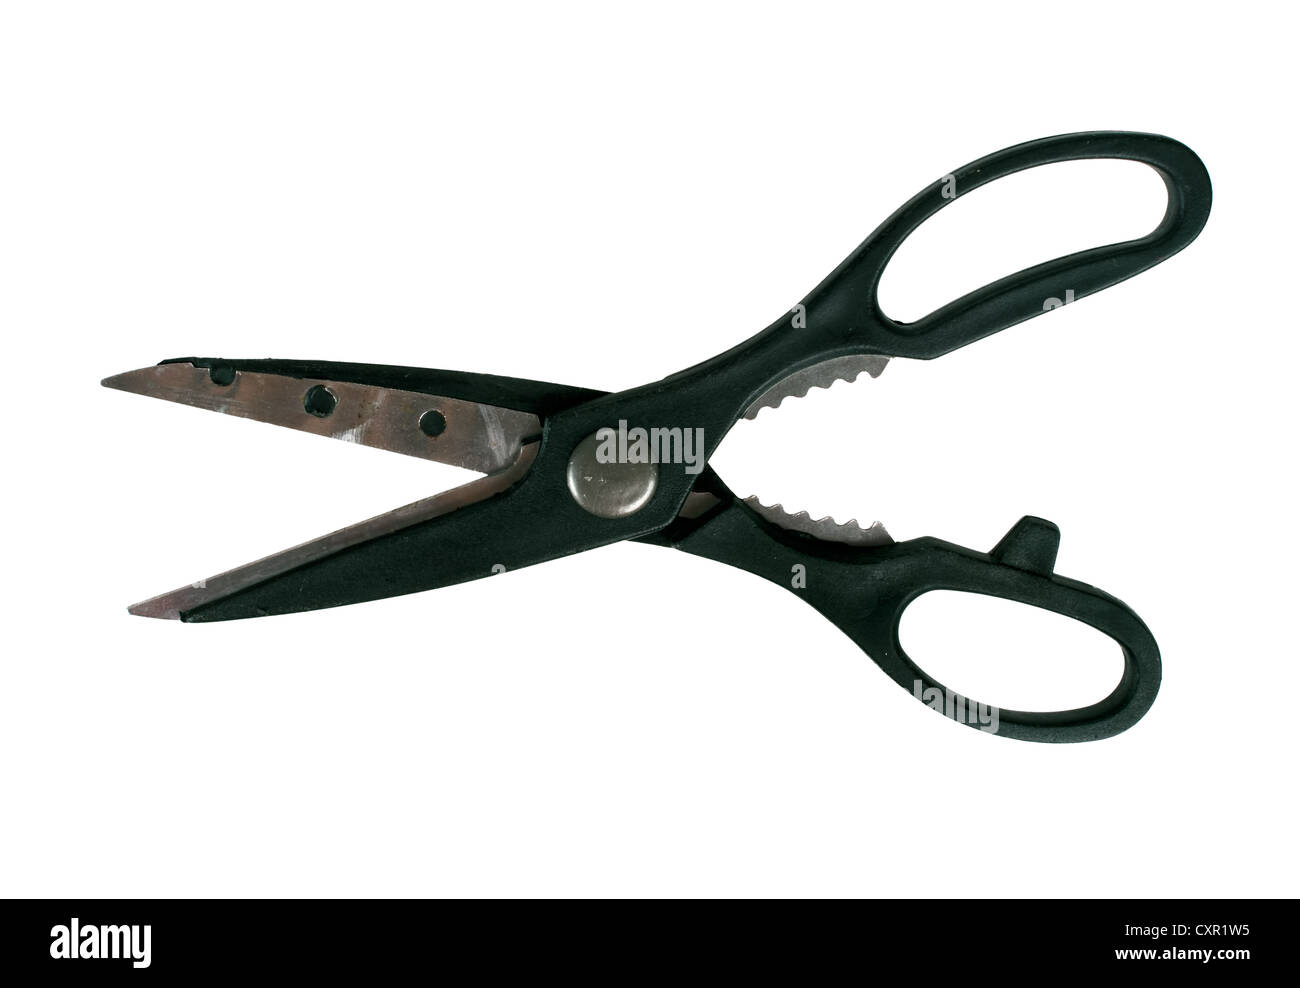 Kitchen scissors with plastic handles and bottle opener Stock Photo